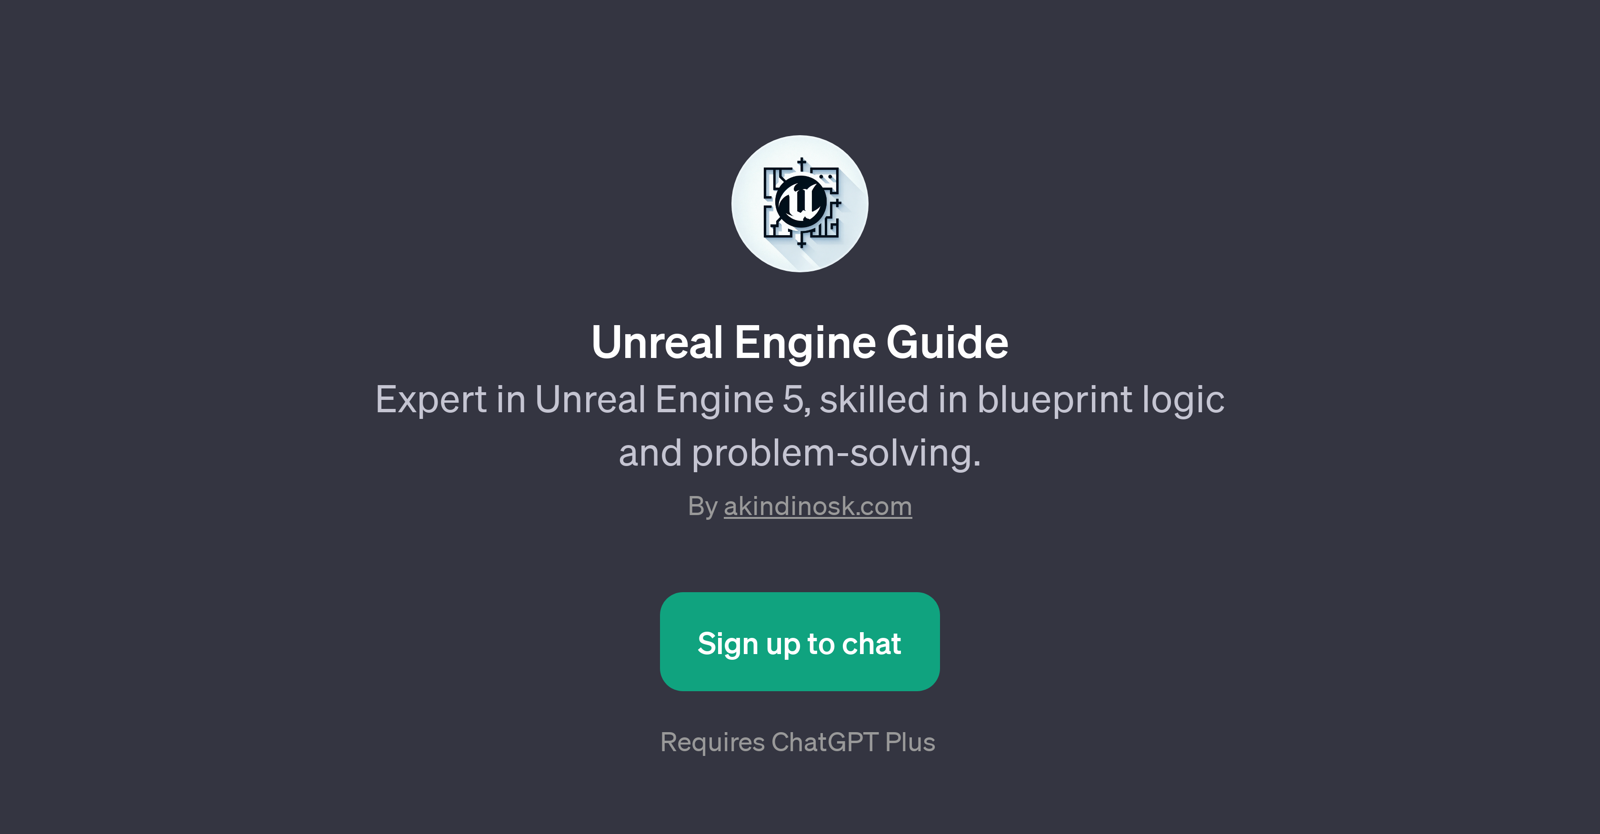 Unreal Engine Guide website